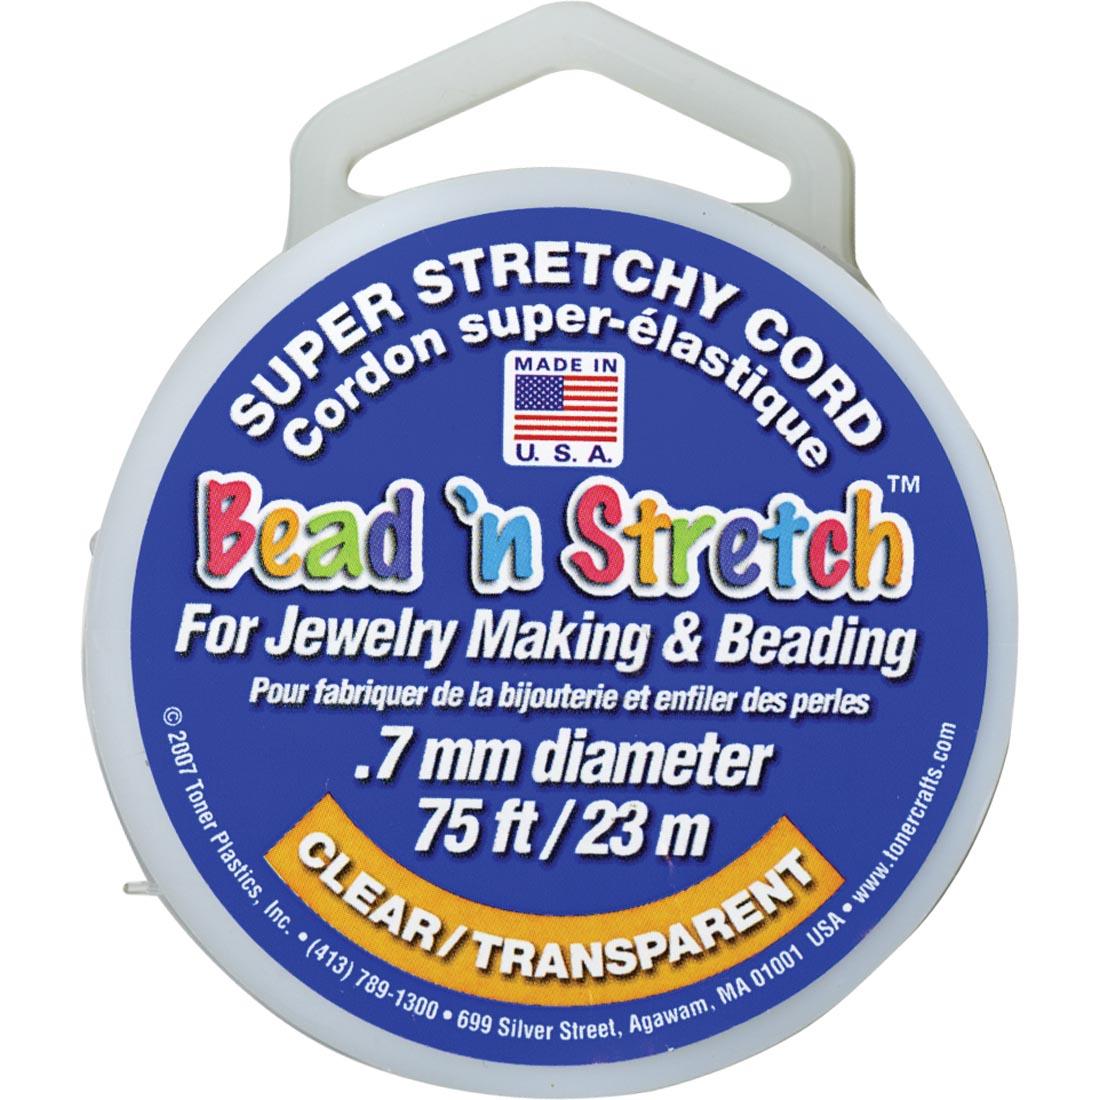 Bead 'n Stretch Super Stretchy Cord Clear Transparent